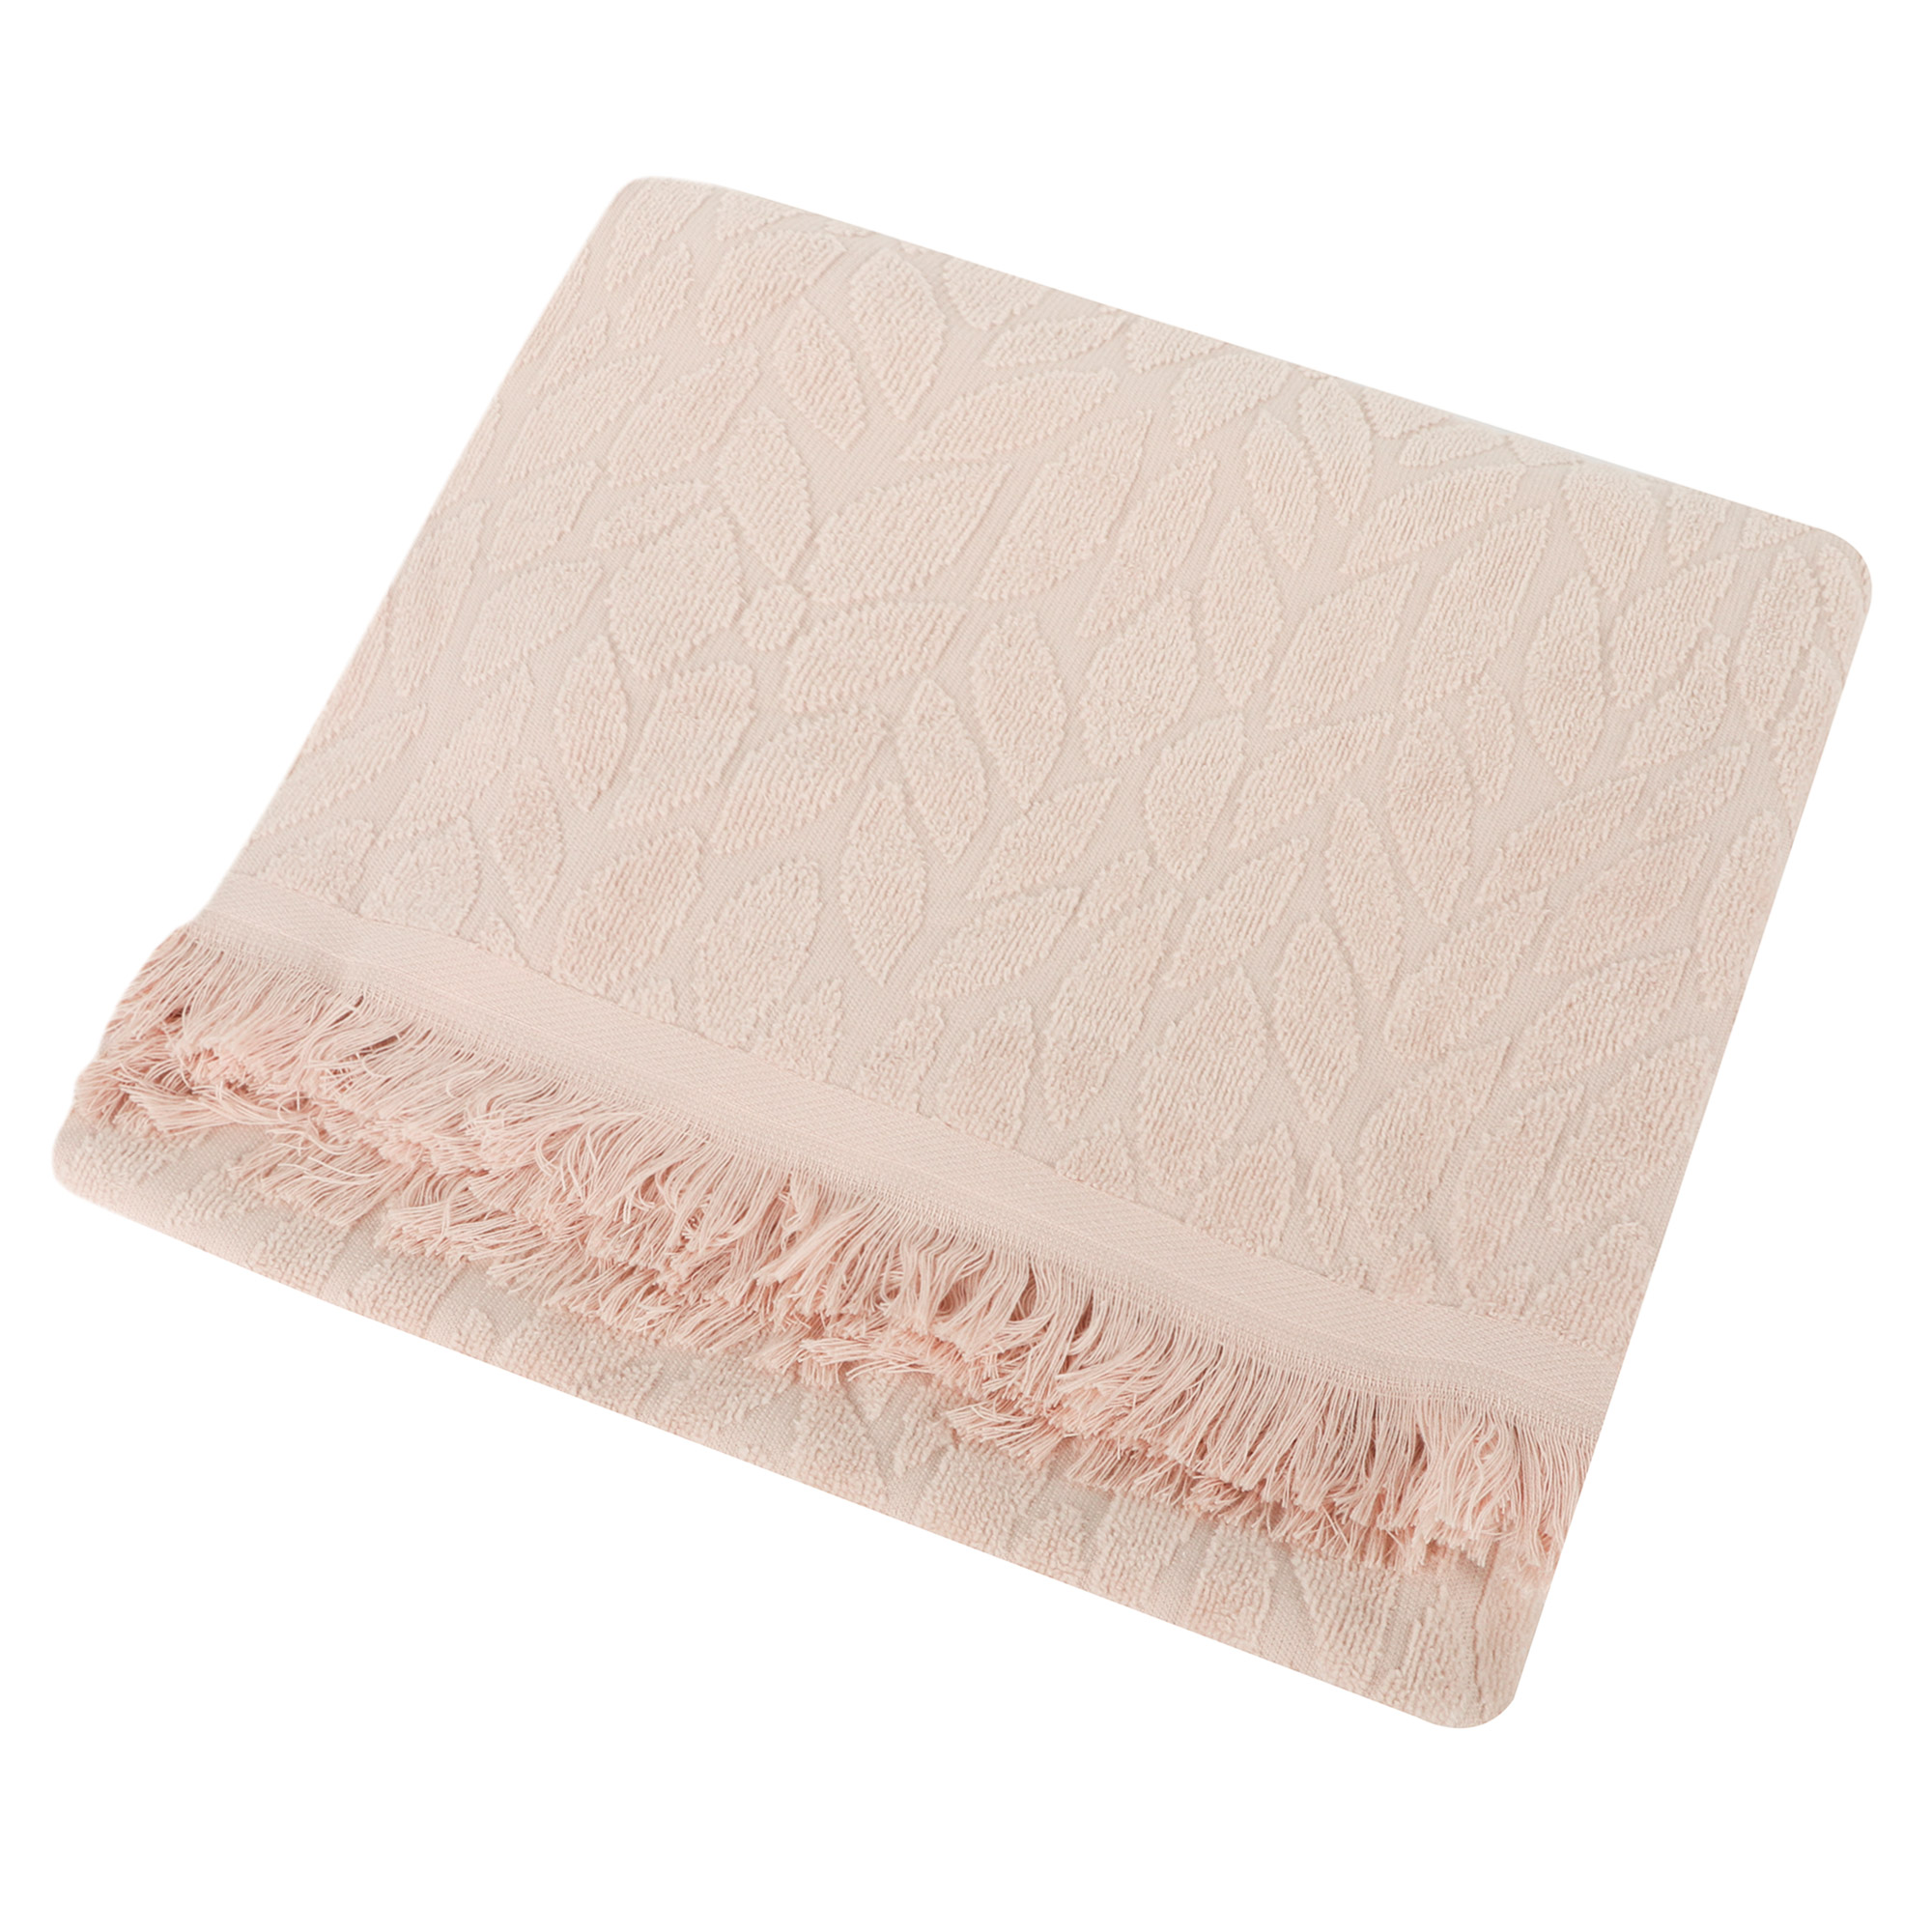 Полотенце махровое Cleanelly Корона персиковое 70х140 см полотенце классик розово персиковый р 50х90